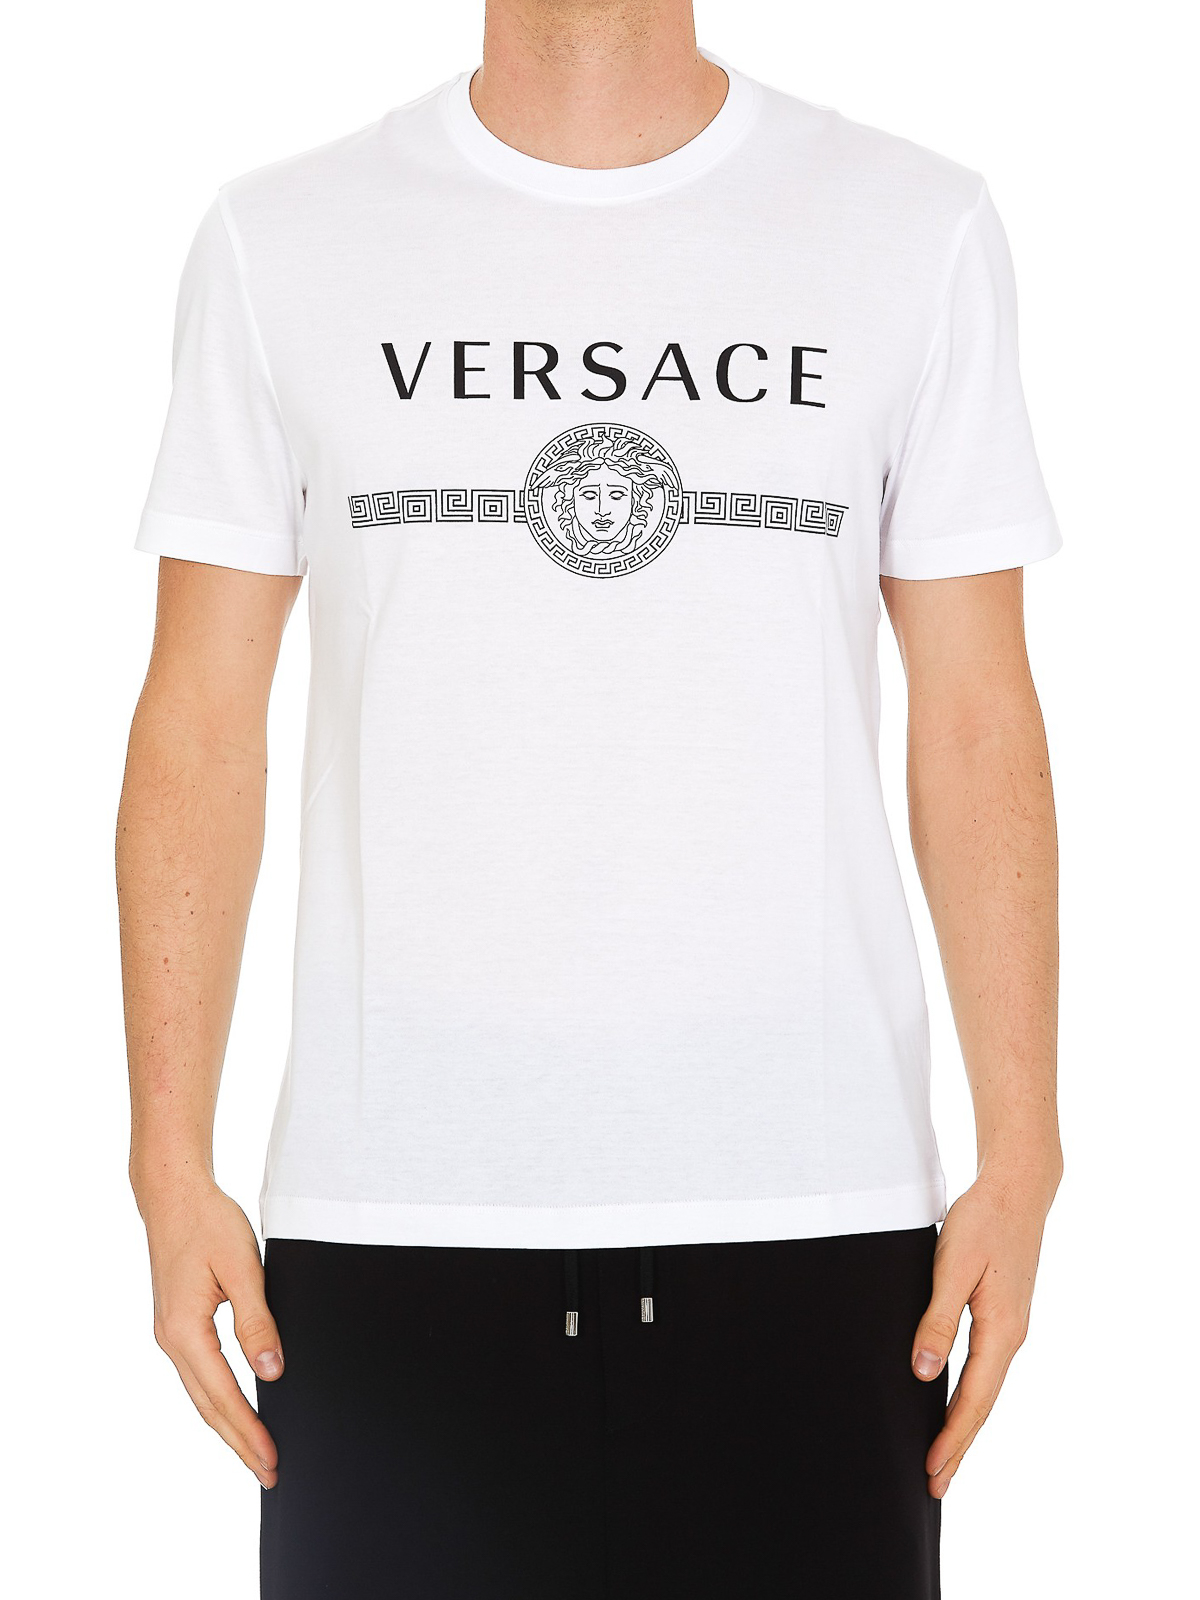 Versace - Medusa Head and logo print white T-shirt - t-shirts ...